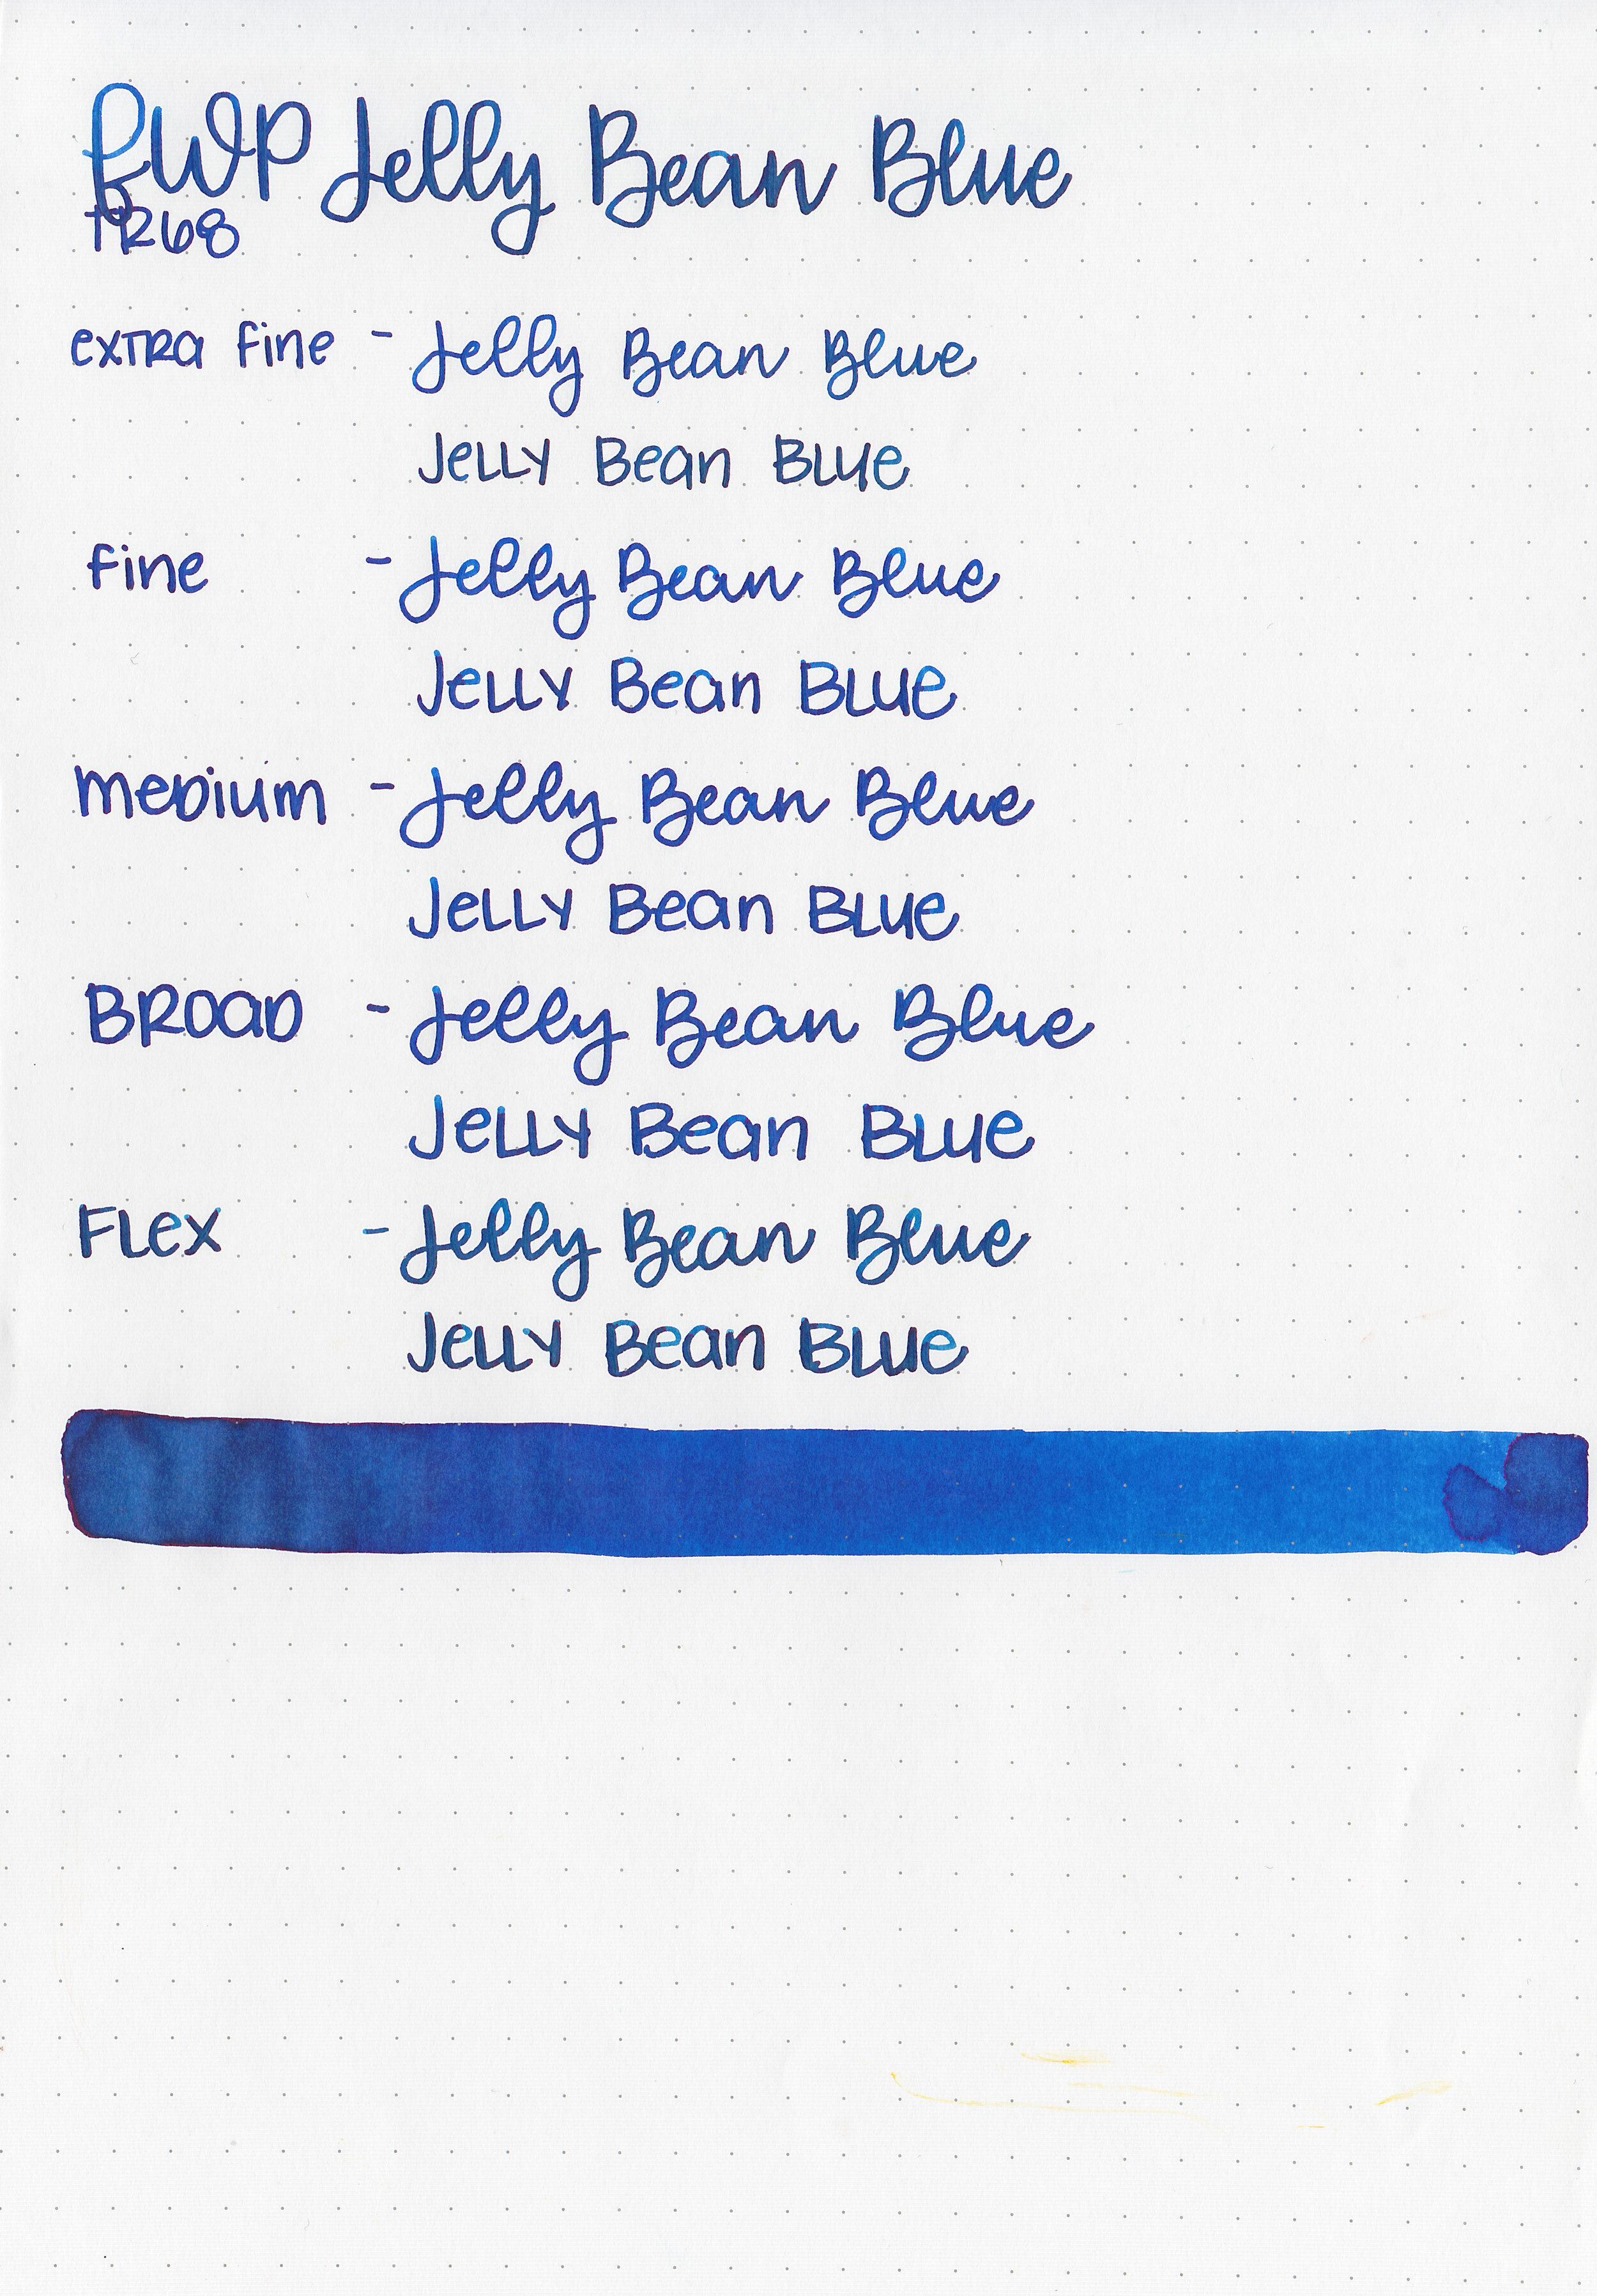 fwp-jelly-bean-blue-7.jpg